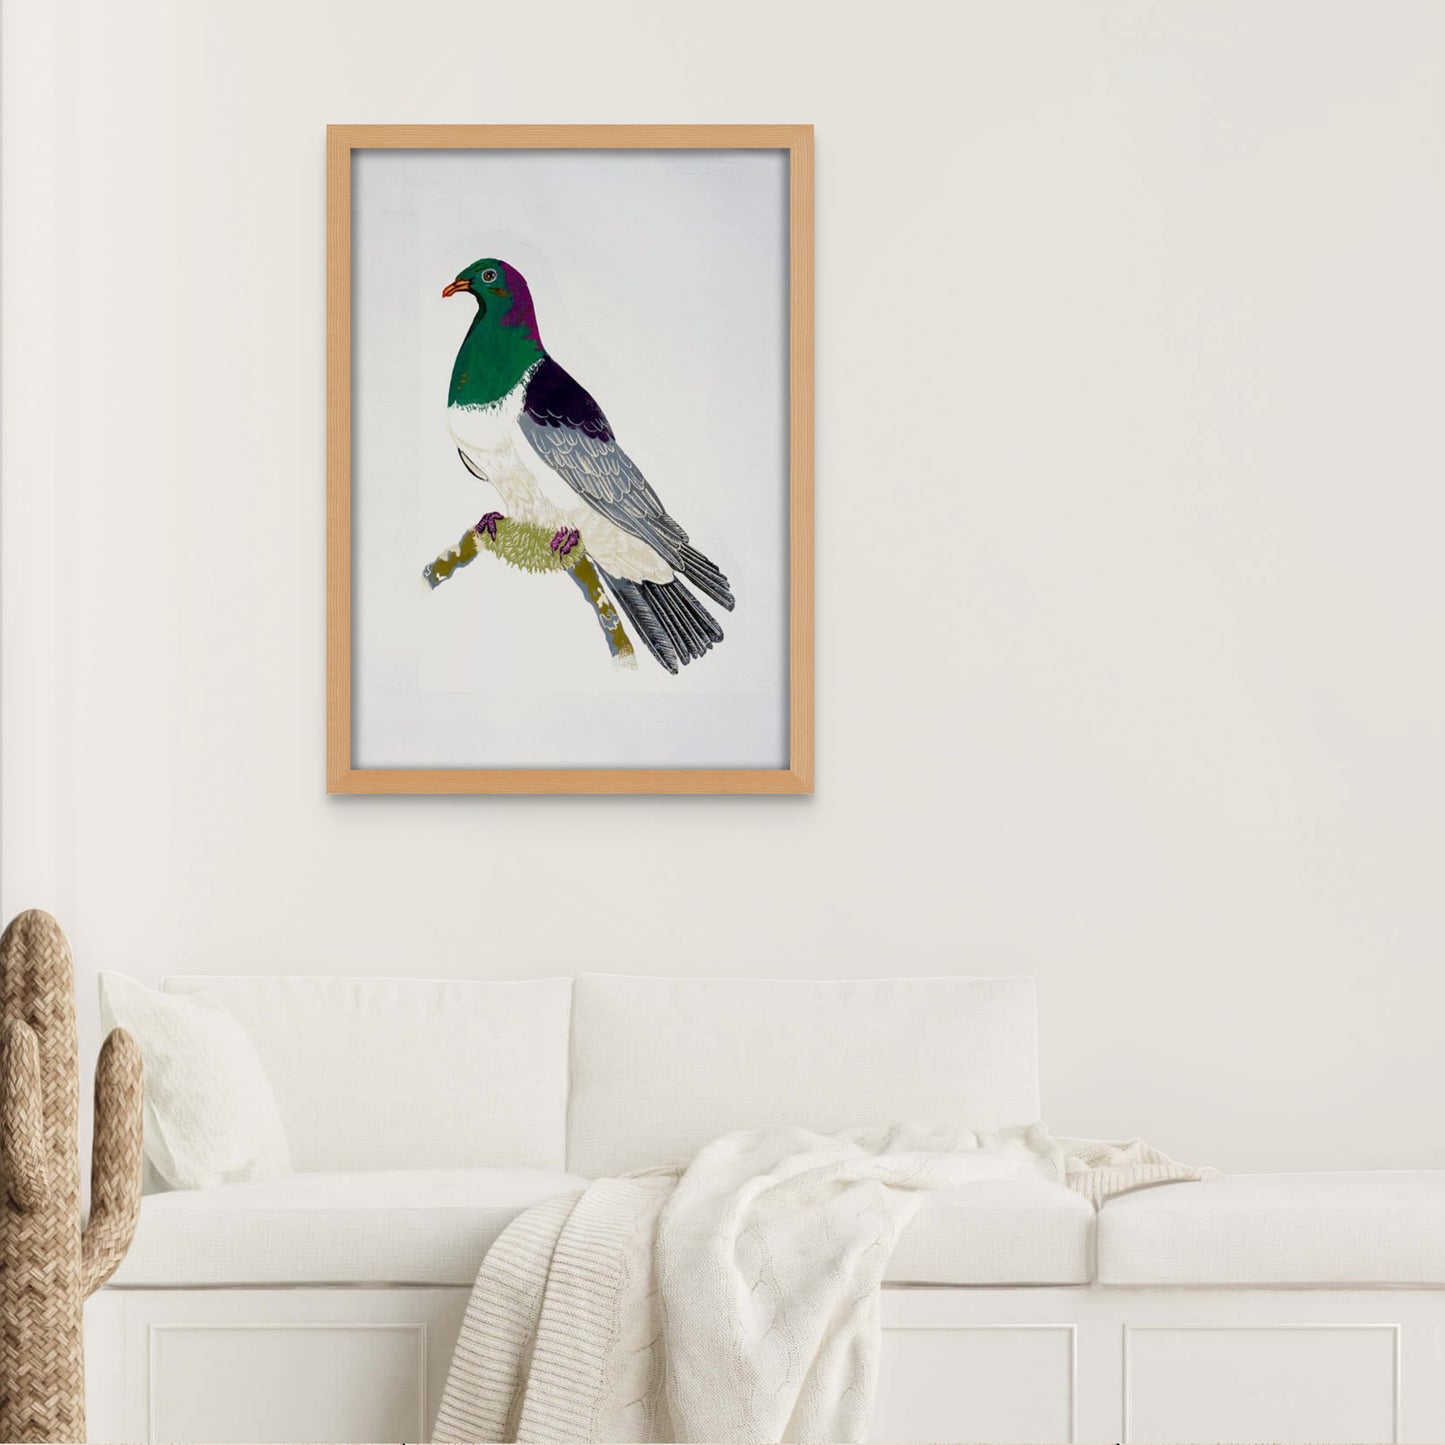 Kereru - New Zealand Pigeon linocut print